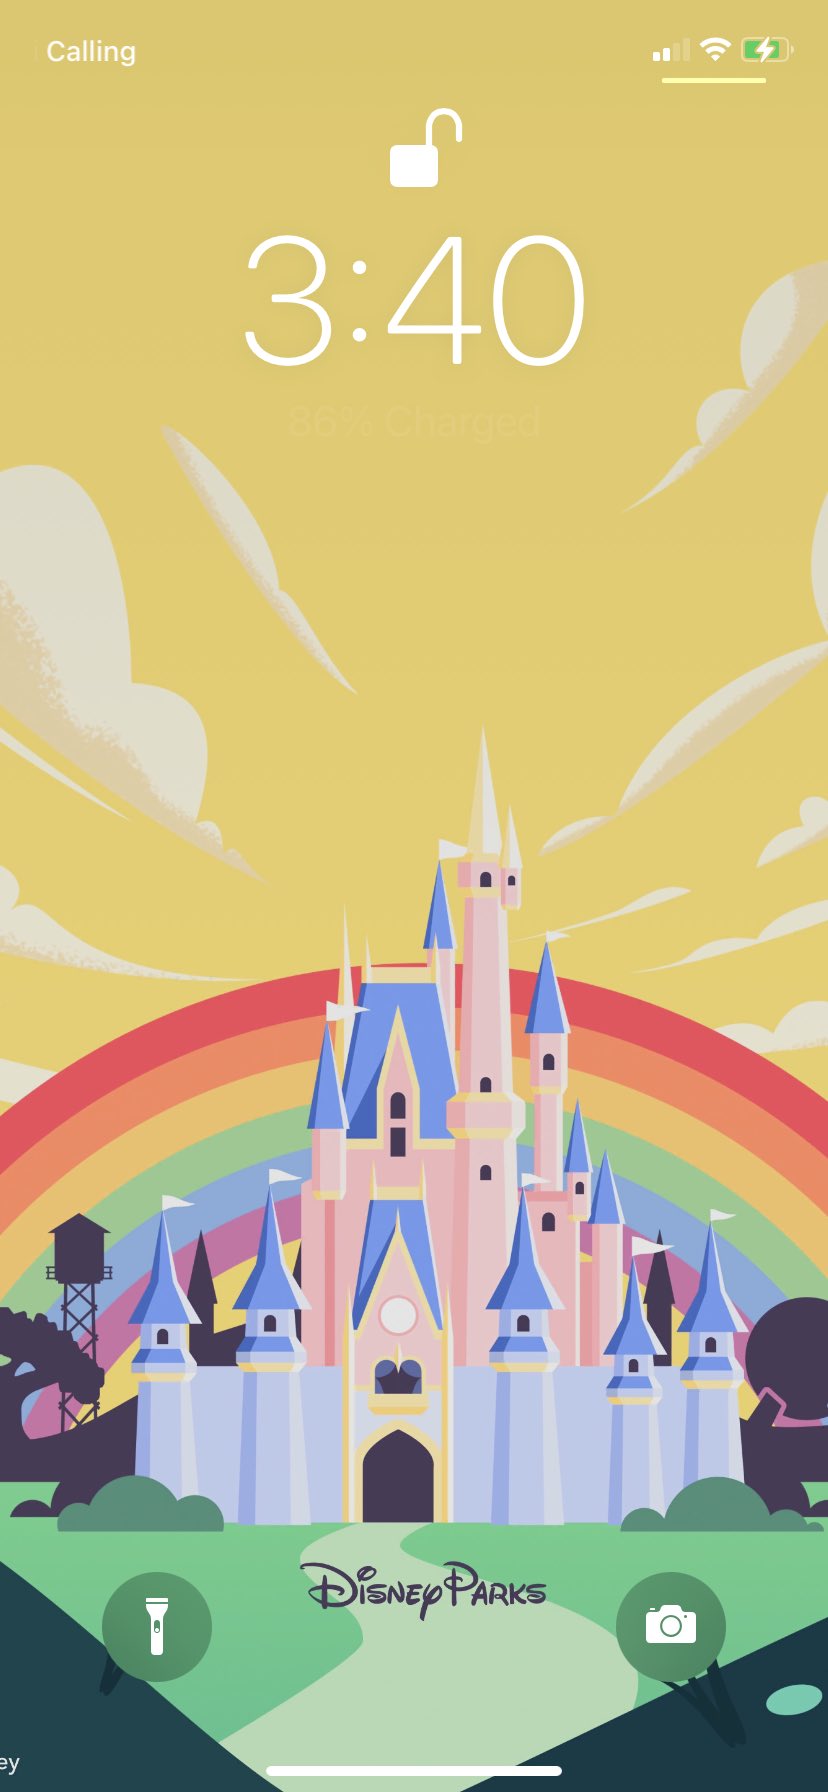 Disney Pride Wallpapers